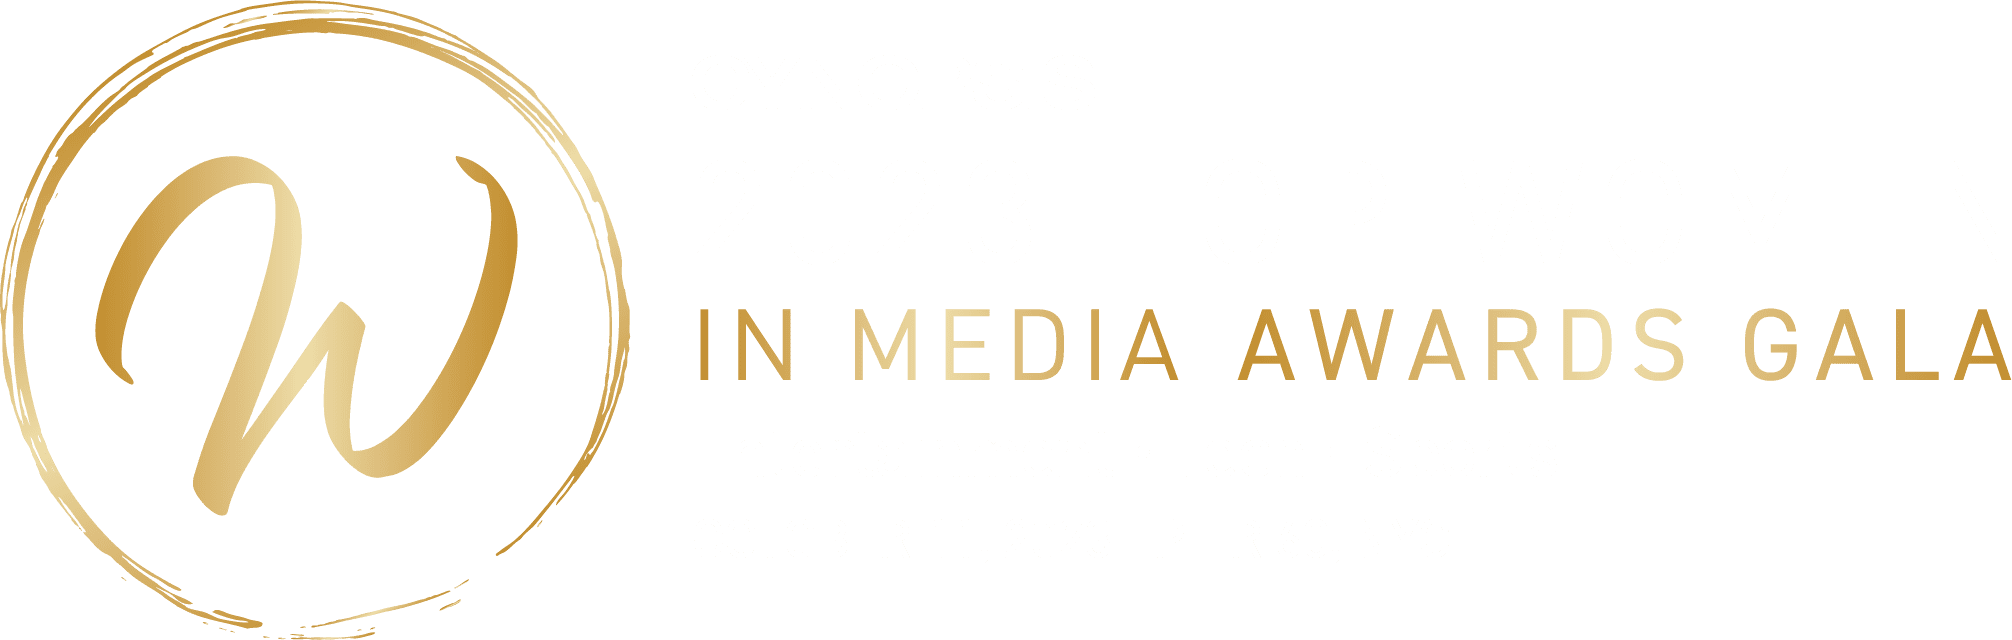 Cynopsis 2023 Top Women in Media